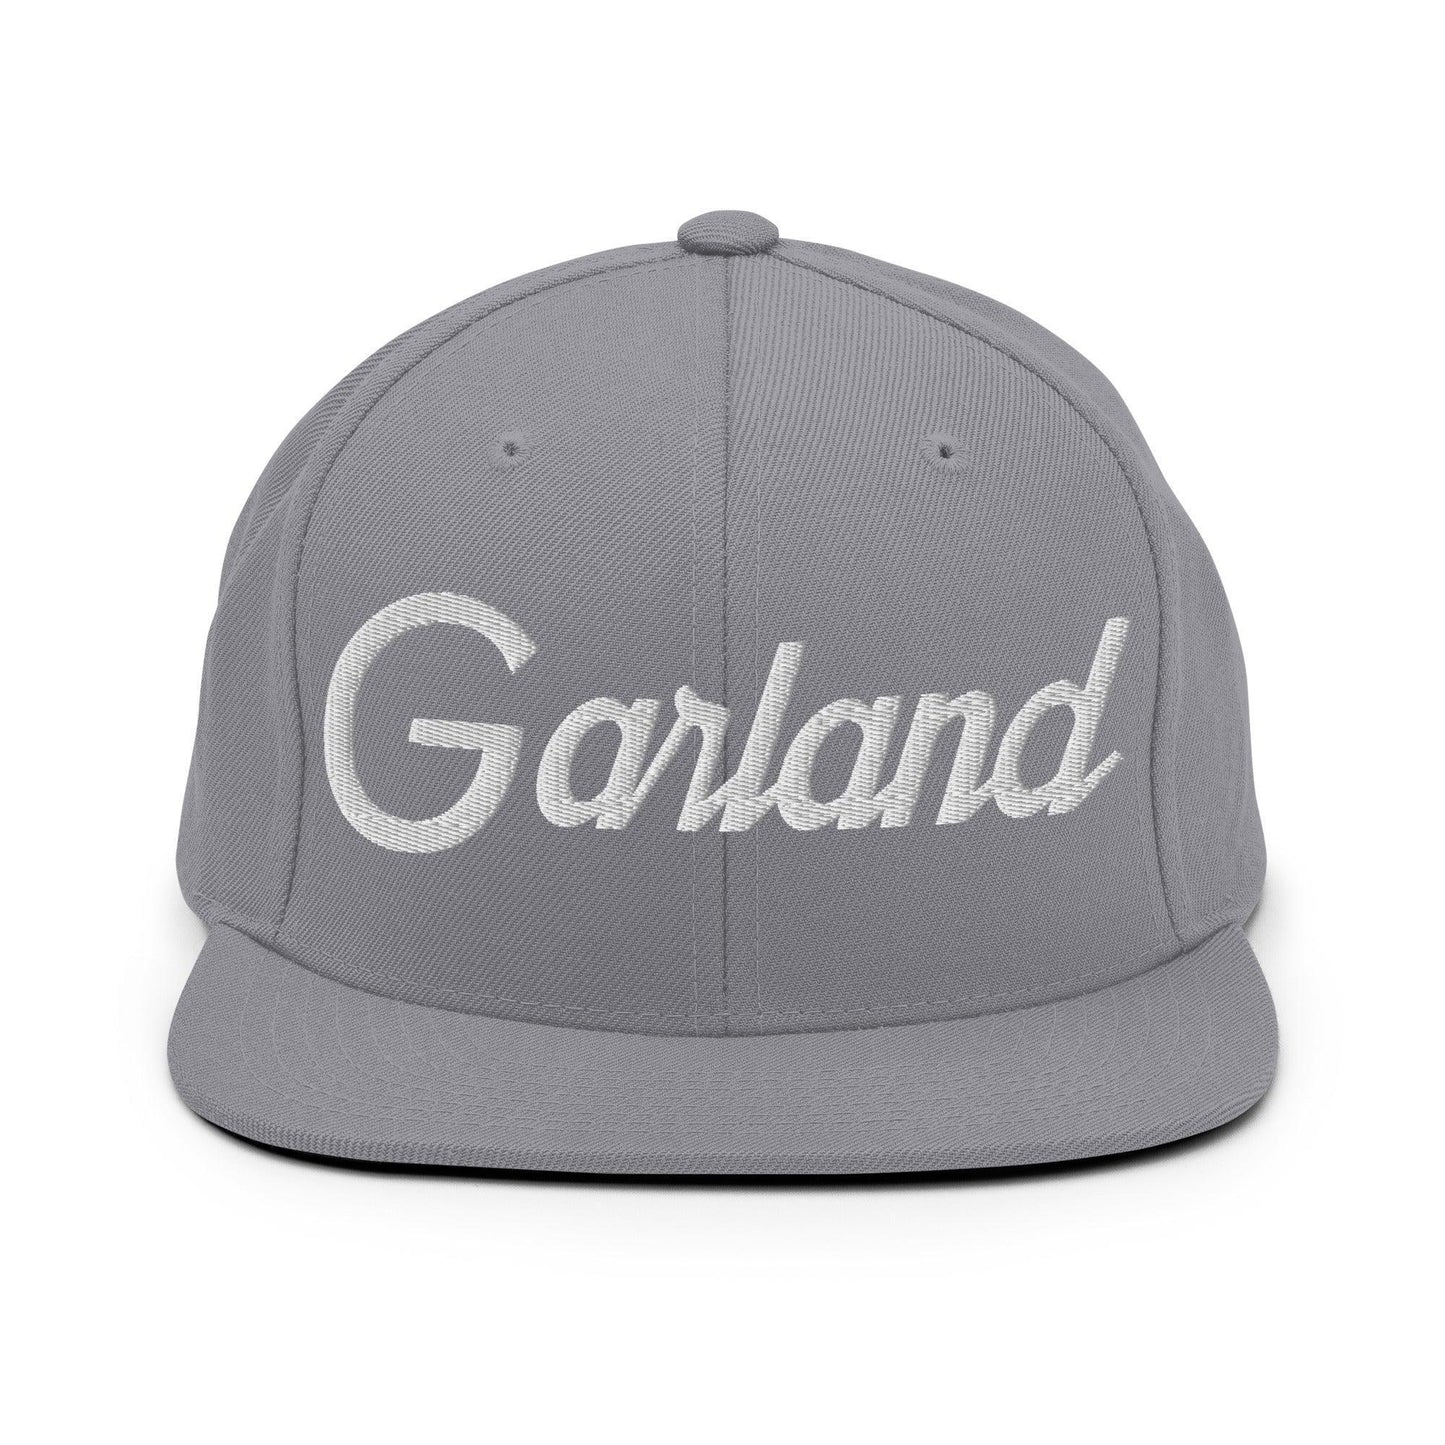 Garland Script Snapback Hat Silver